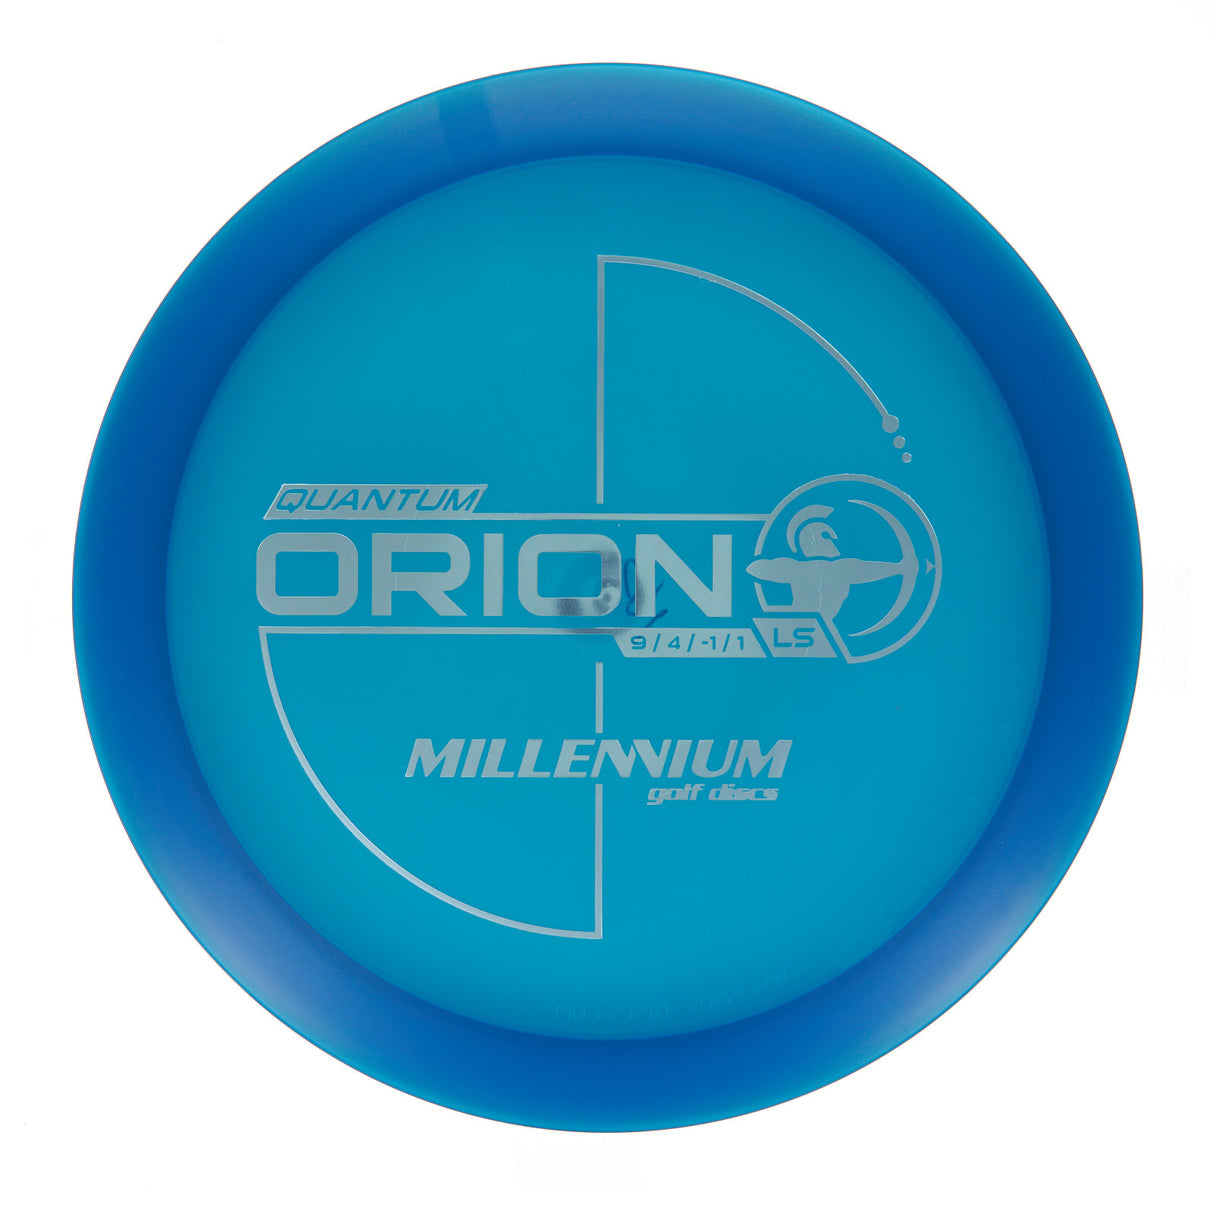 Millennium Orion LS - Quantum  163g | Style 0001